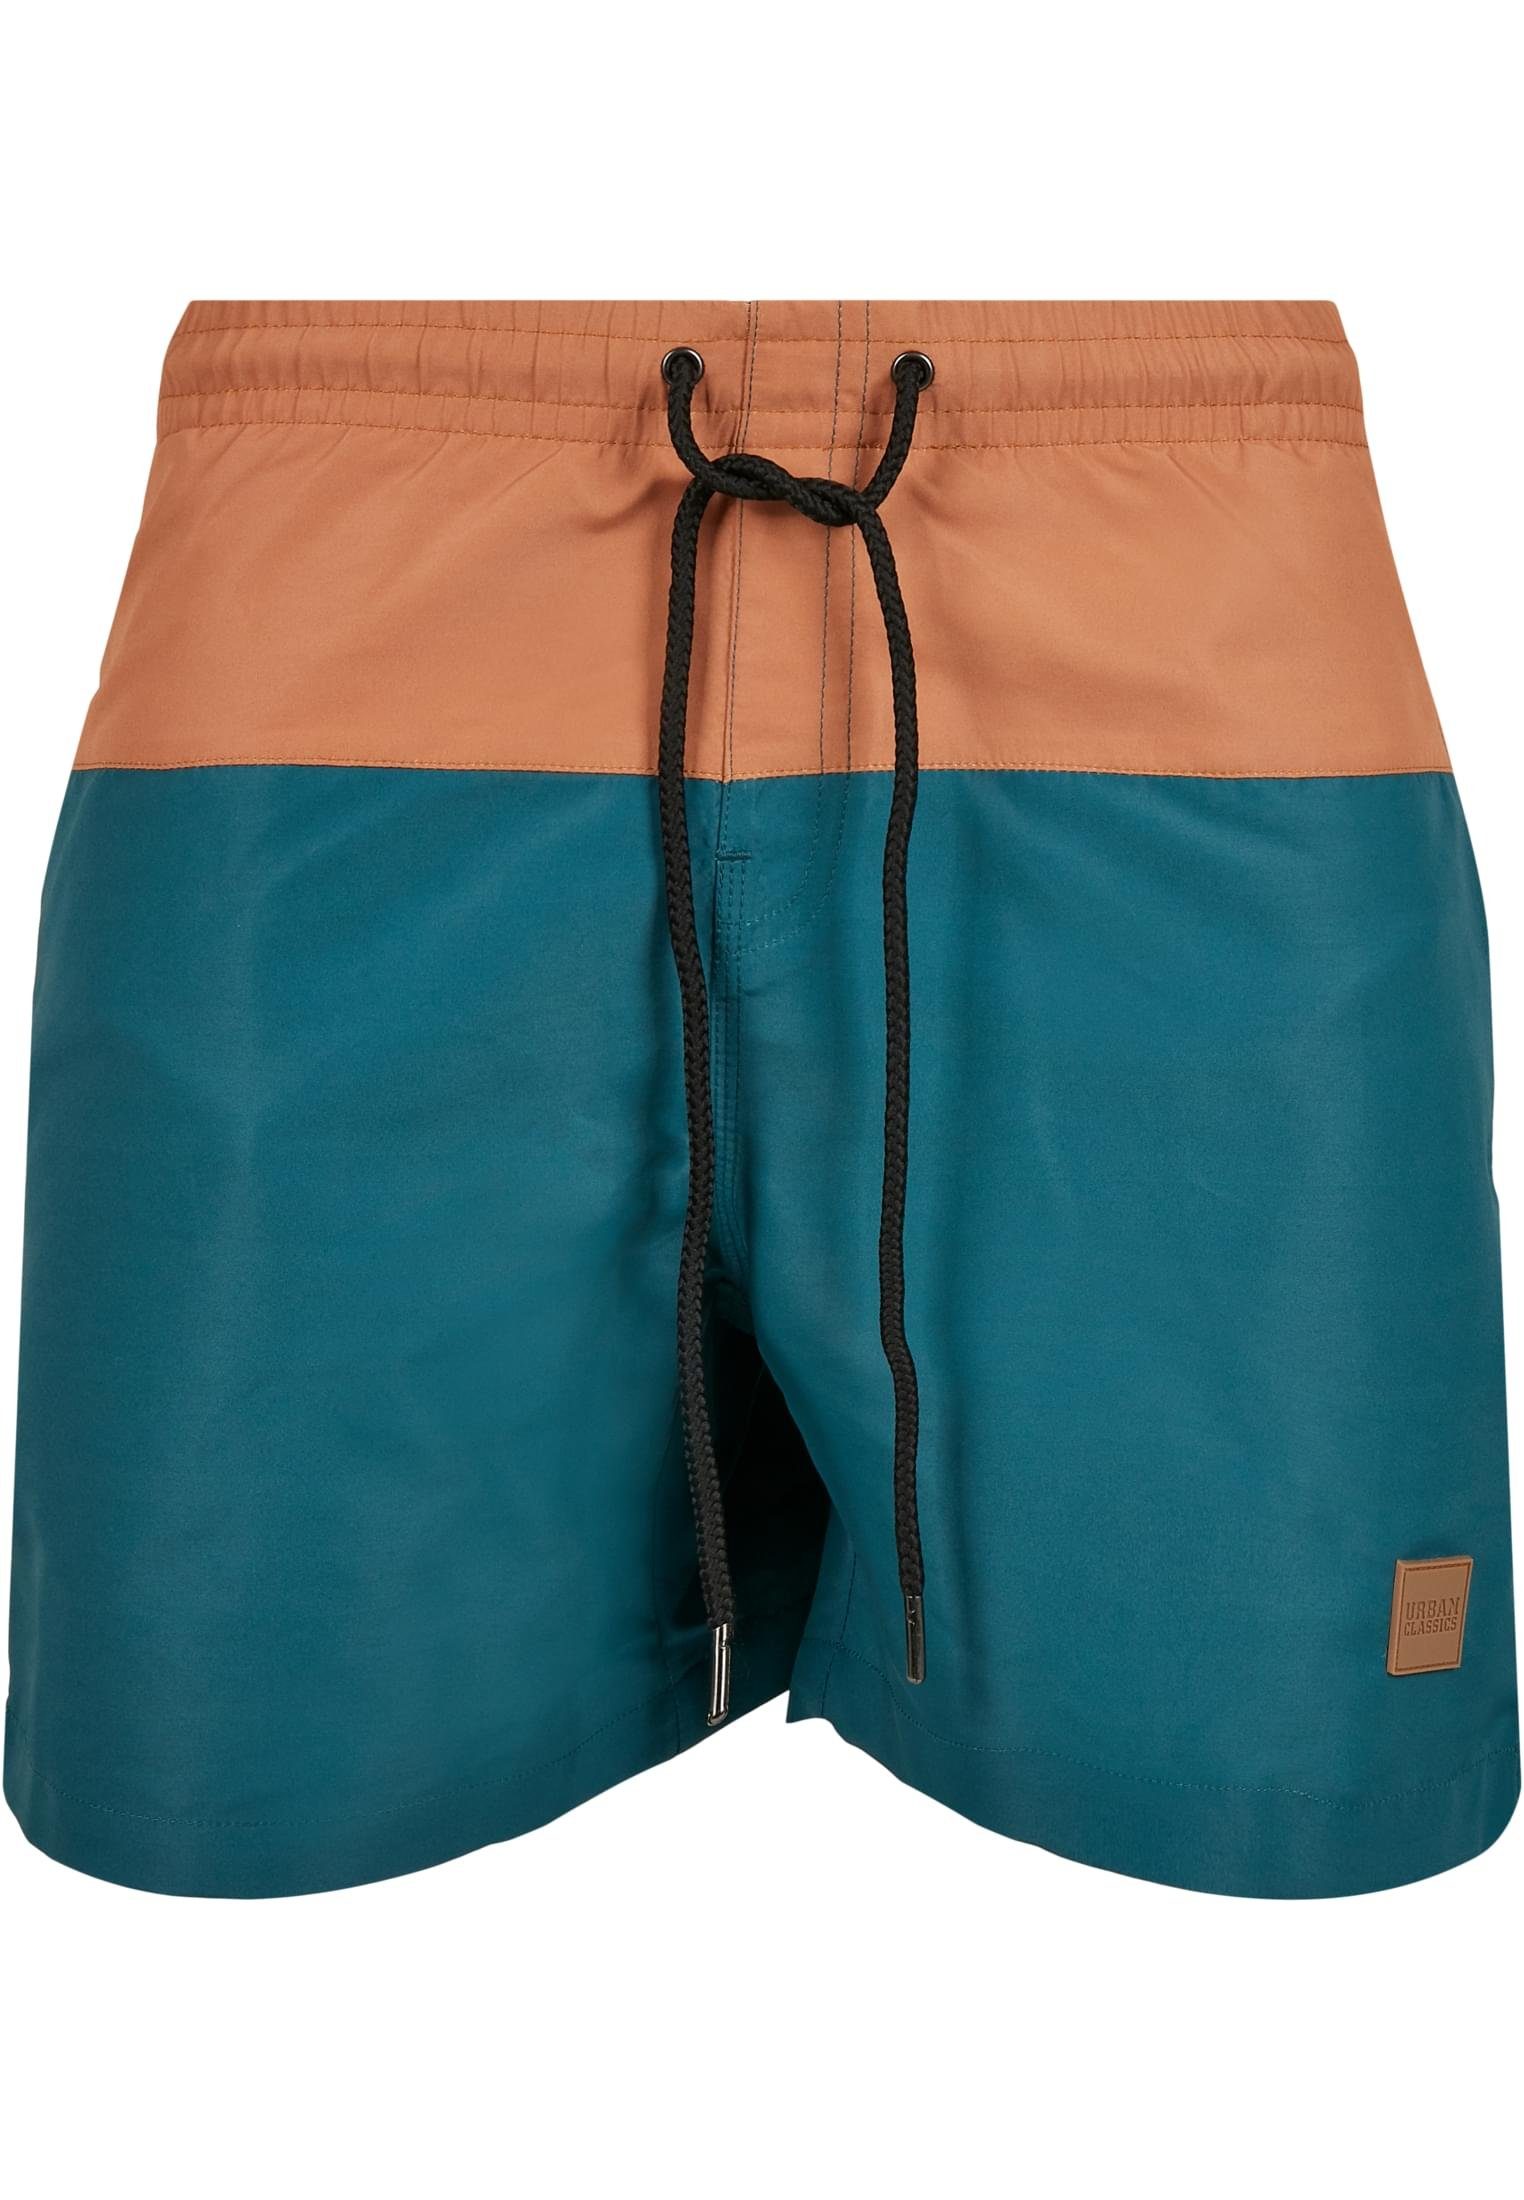 teal/toffee URBAN Herren Swim Badeshorts CLASSICS Shorts